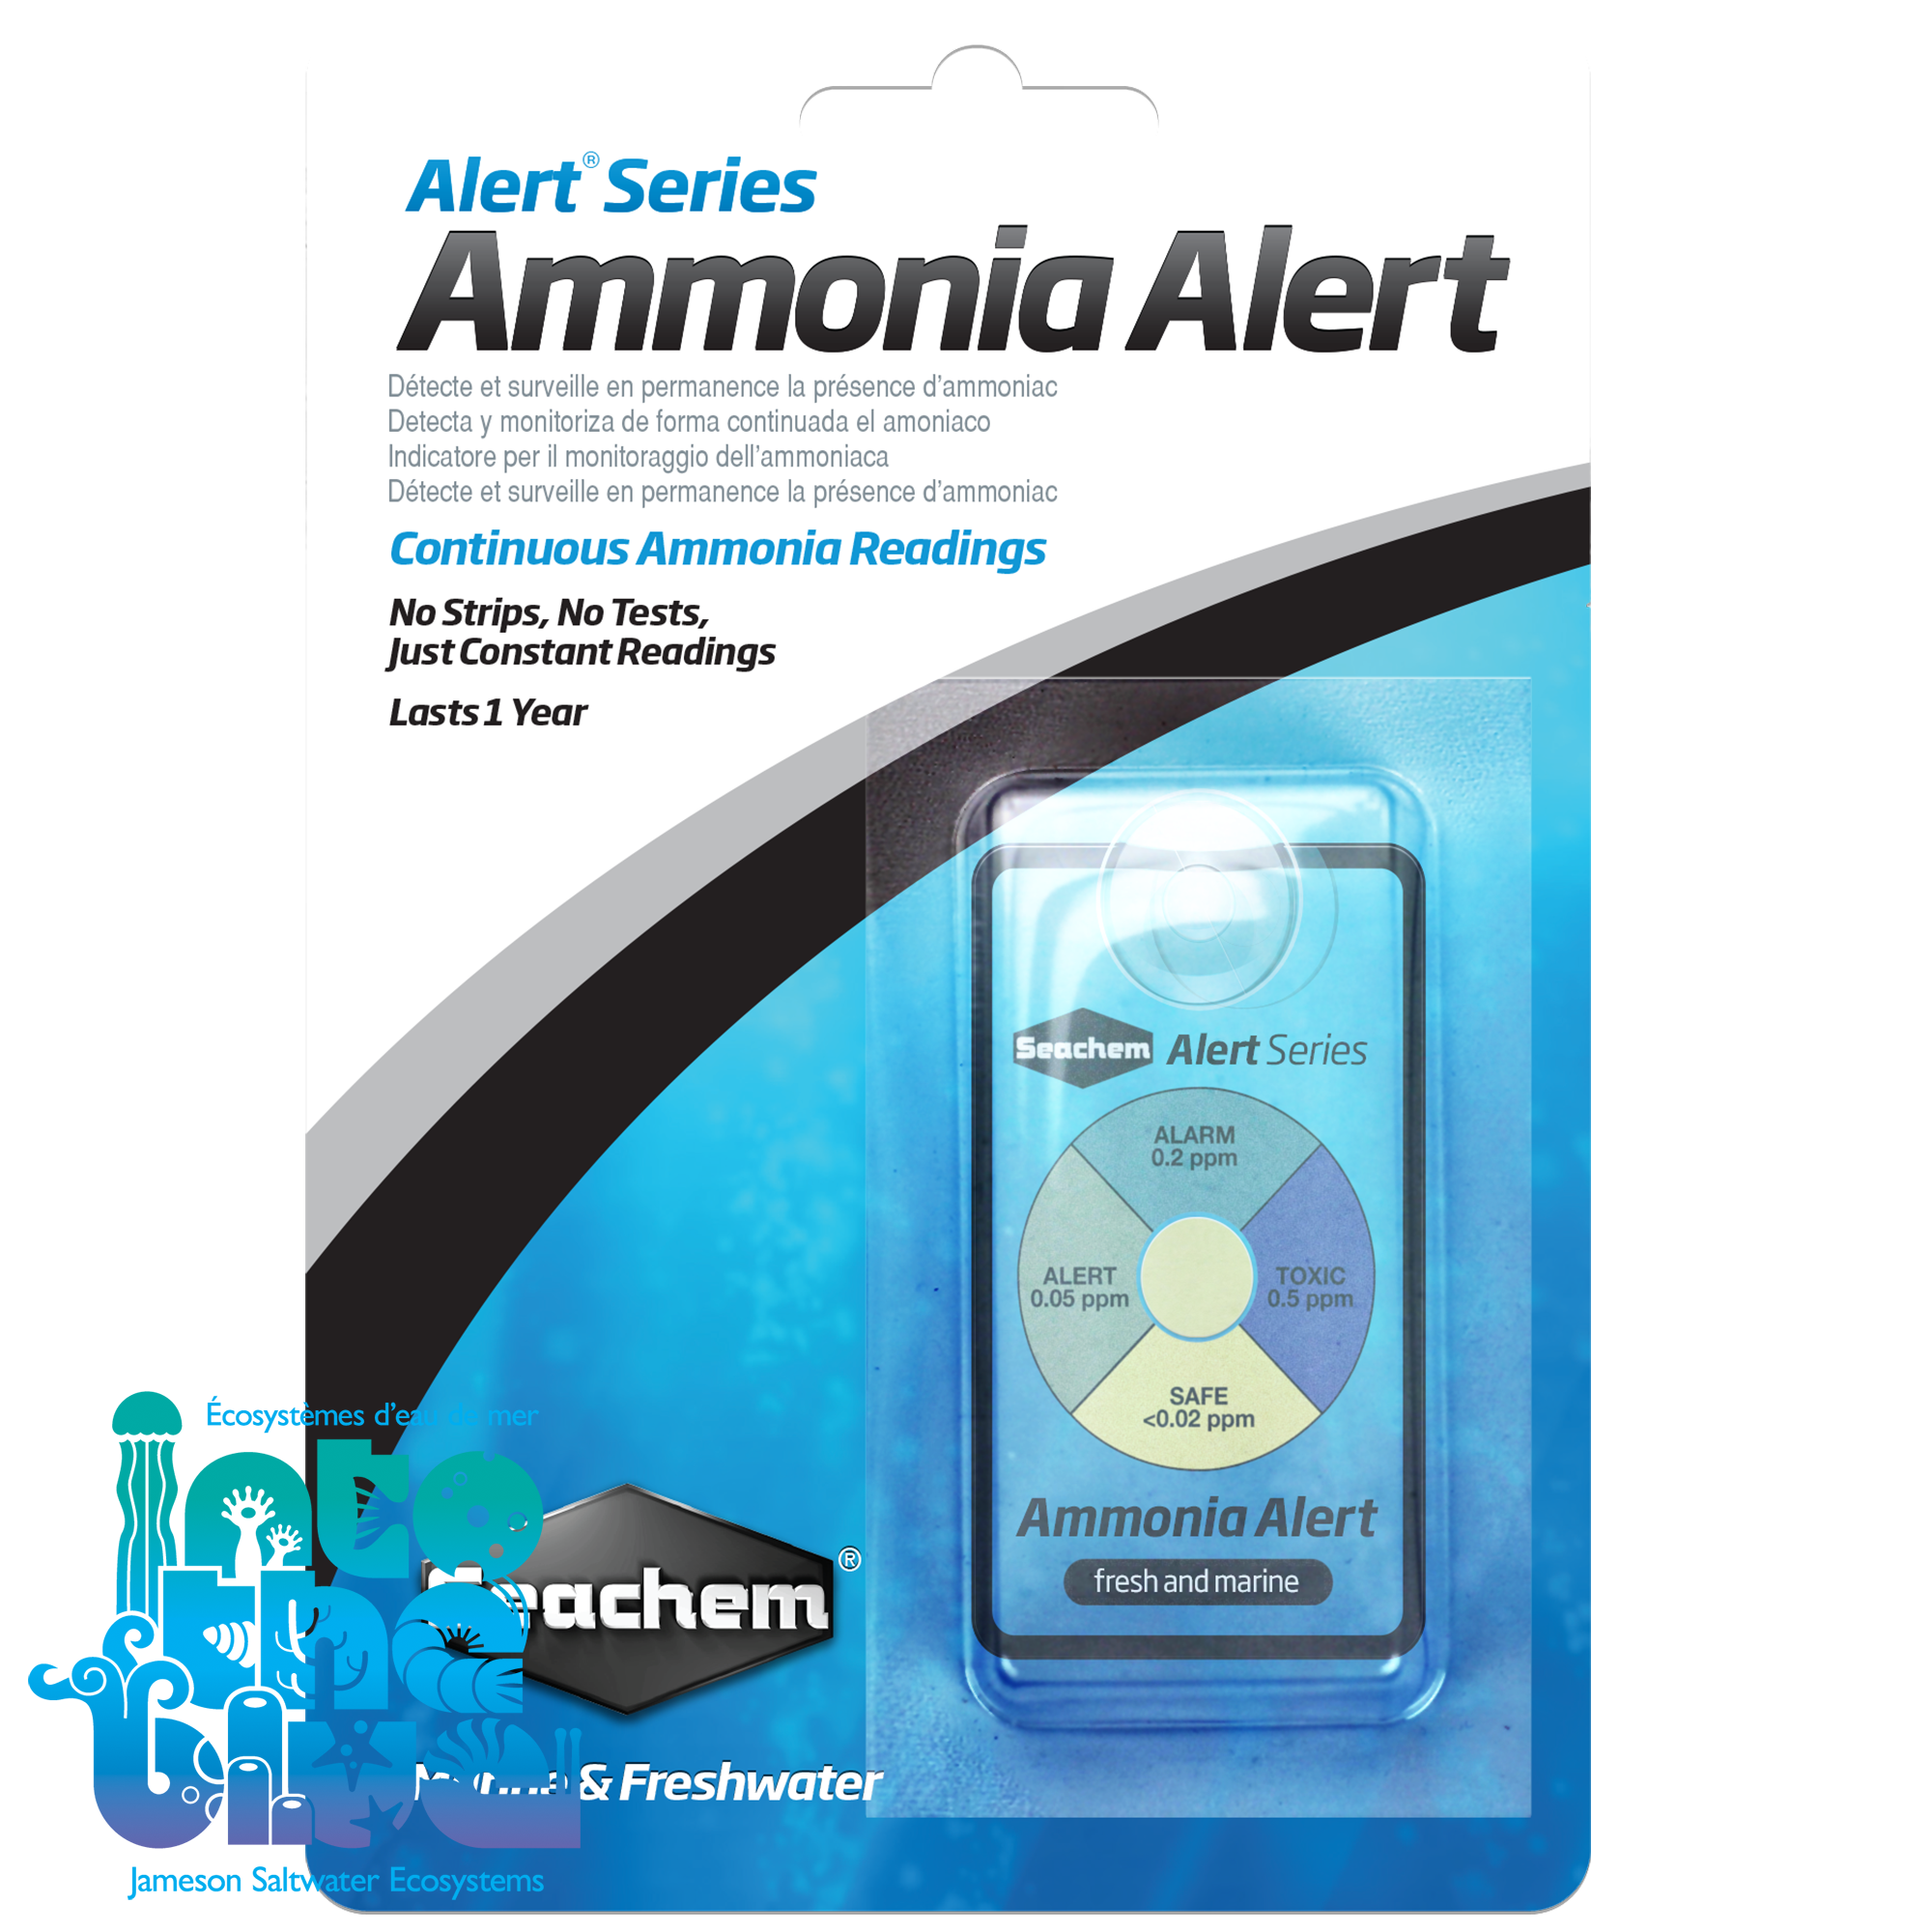 Seachem - Ammonia Alert